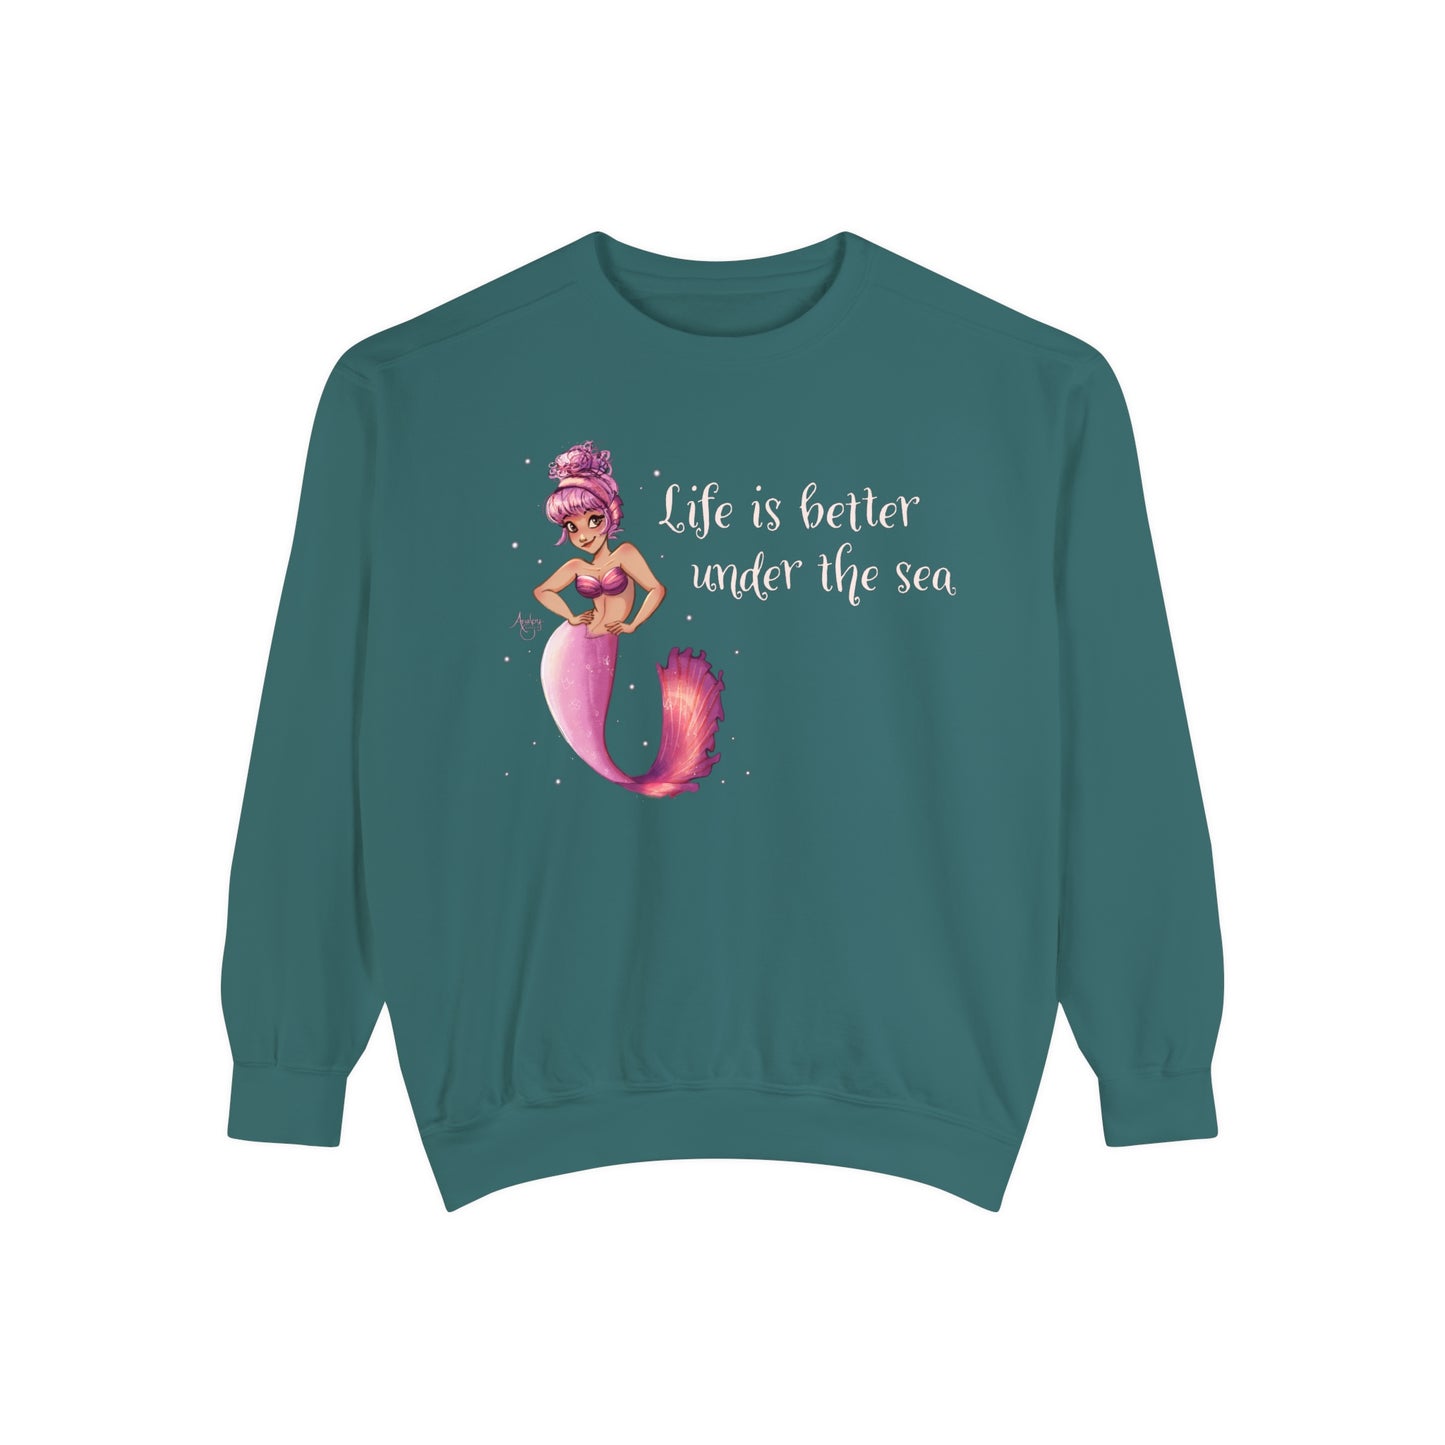 Life Is Better Under The Sea Crewneck Sweatshirt